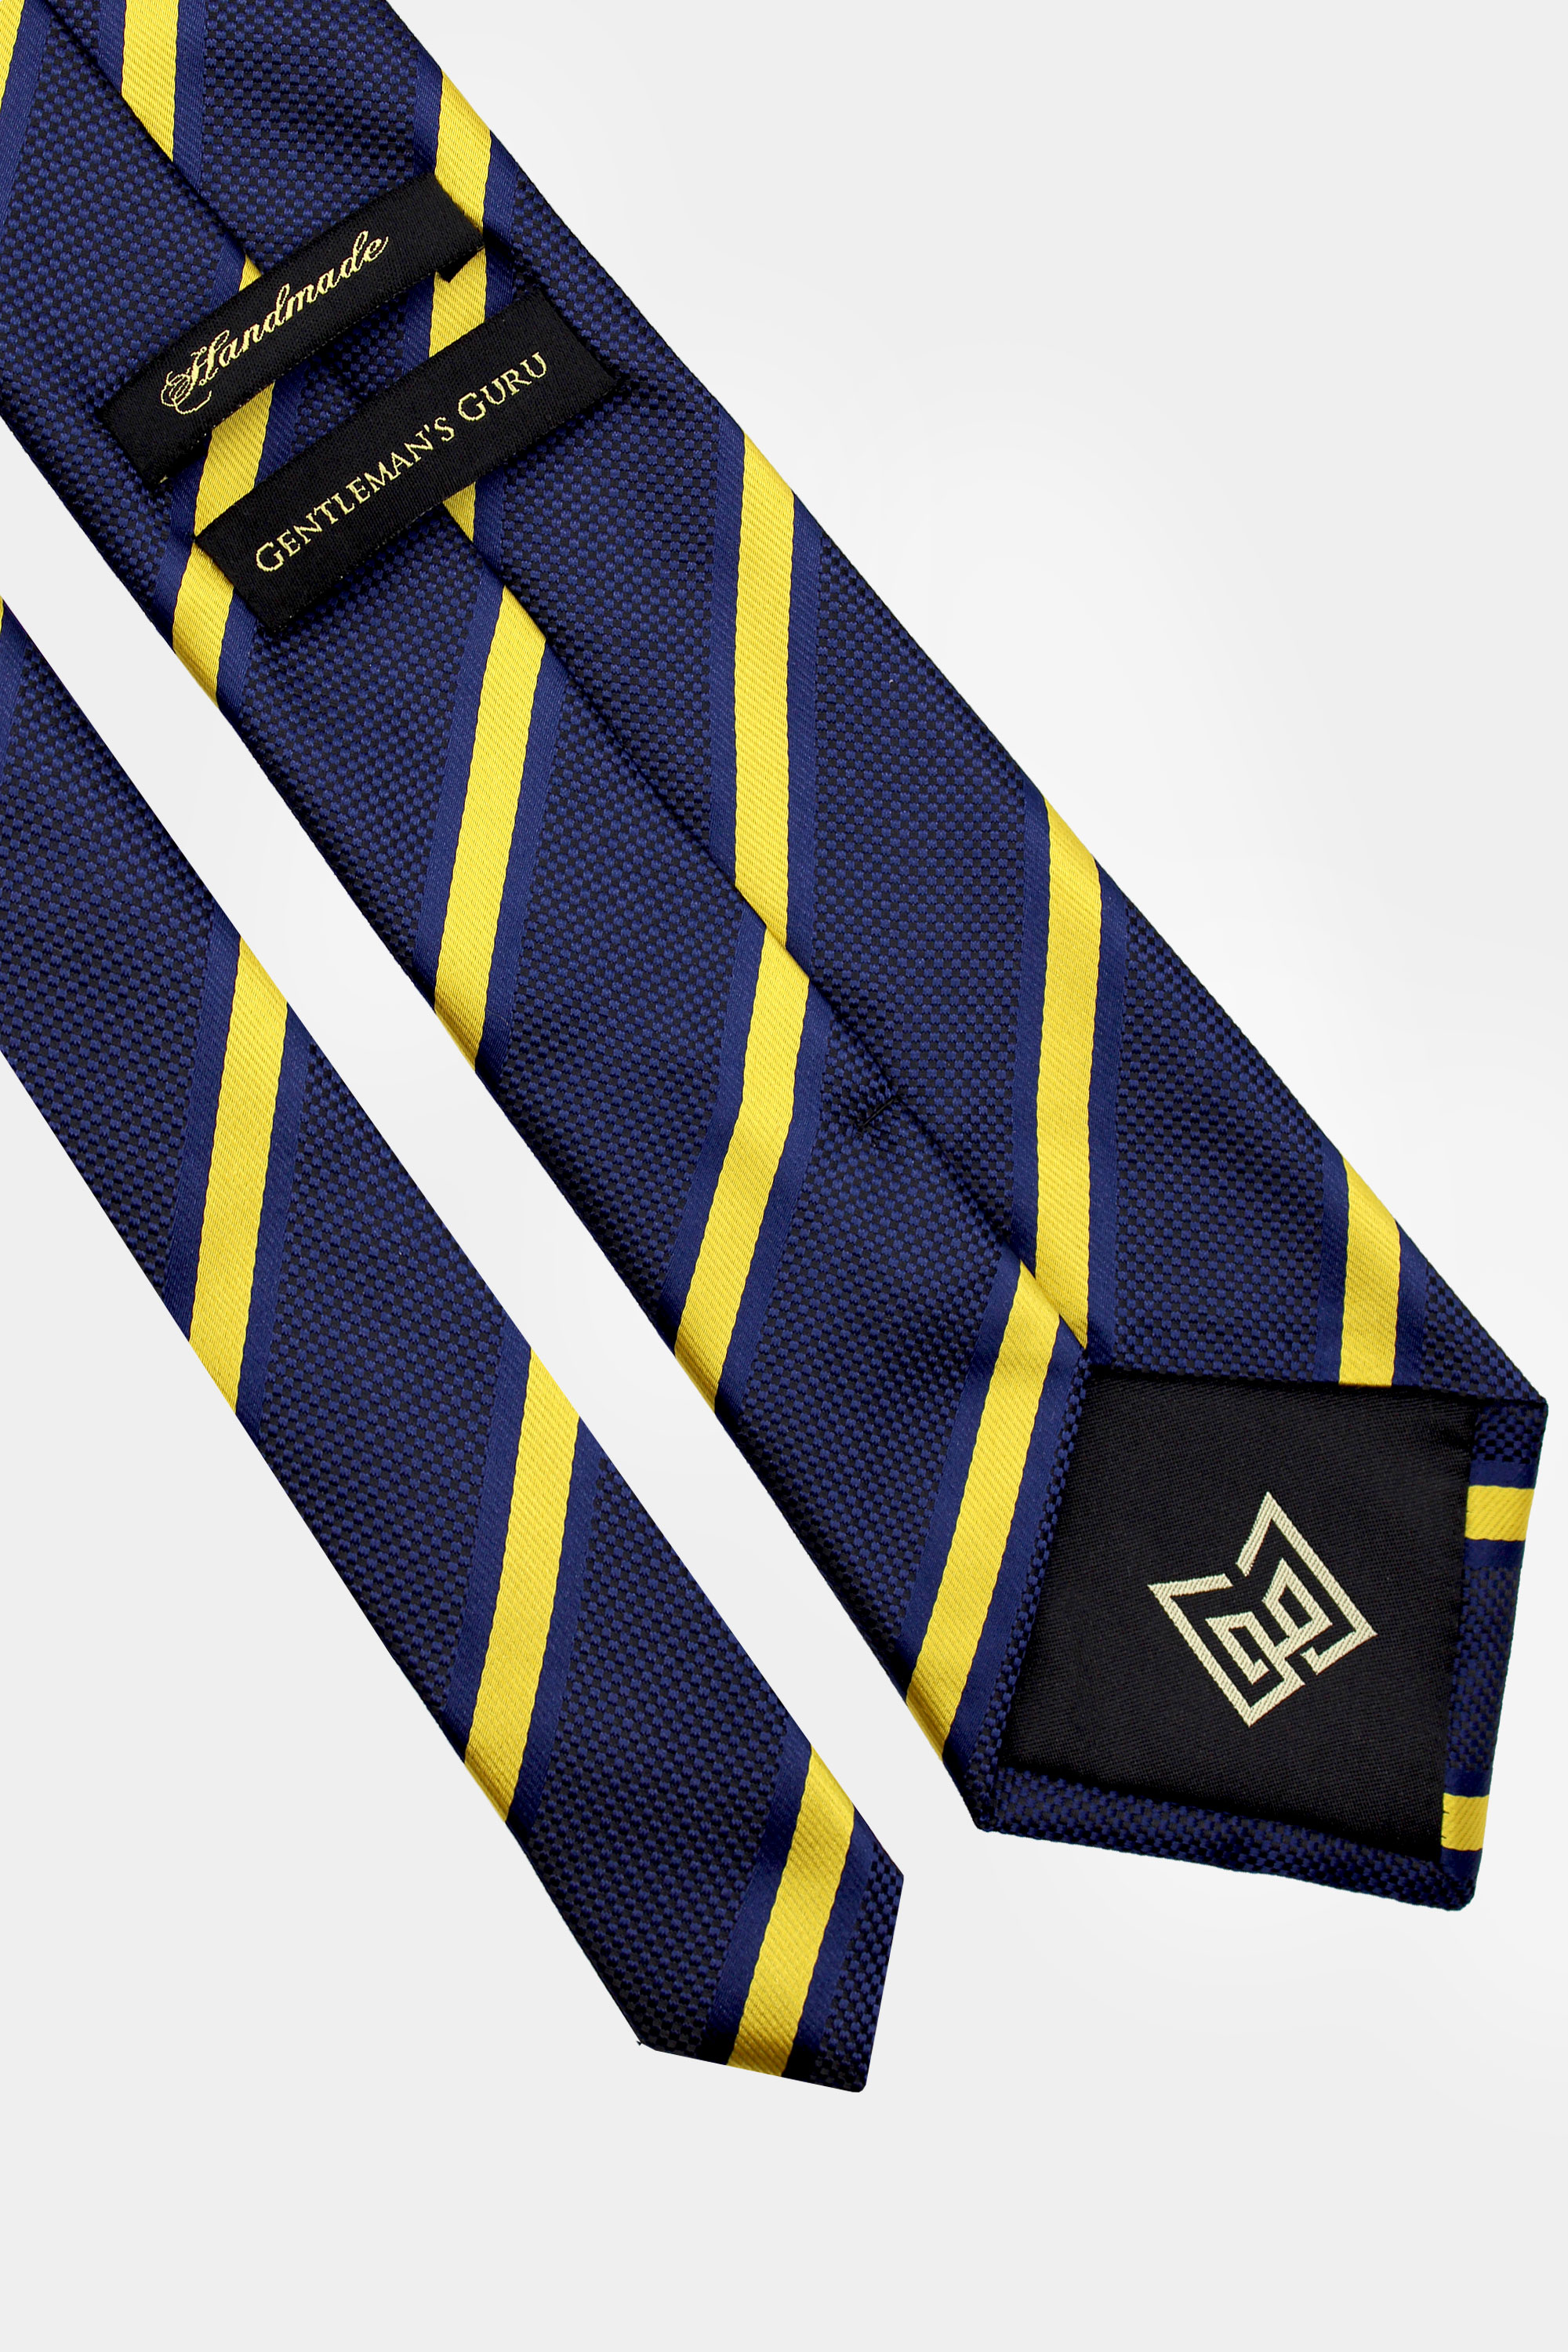 Mens-Luxury-Navy-Blue-and-Gold-Striped-Tie-Grooms-Wedding-from-Gentlemansguru.com